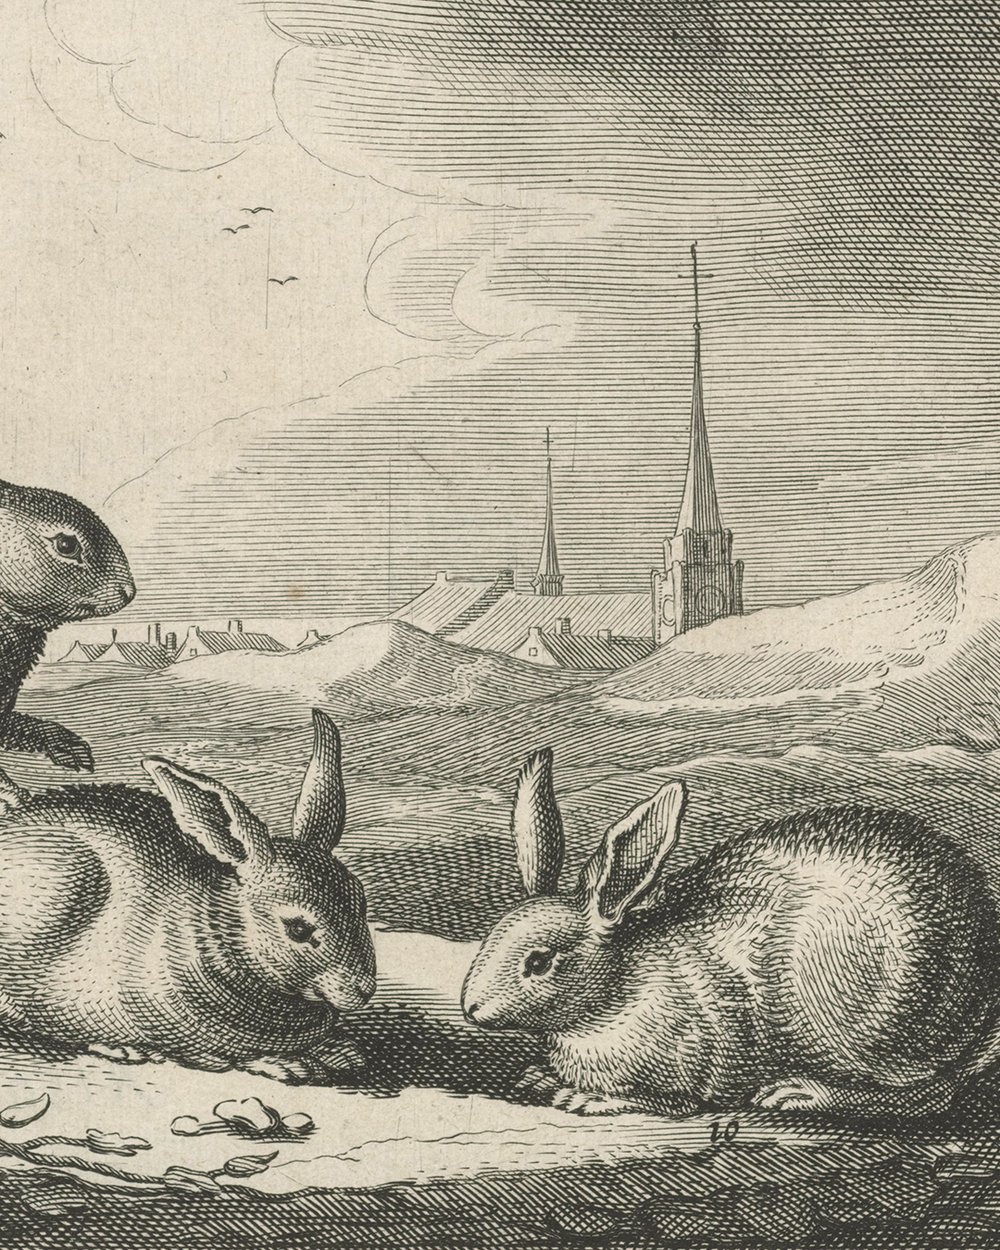 ''Dune landscape with rabbits'' (1641)